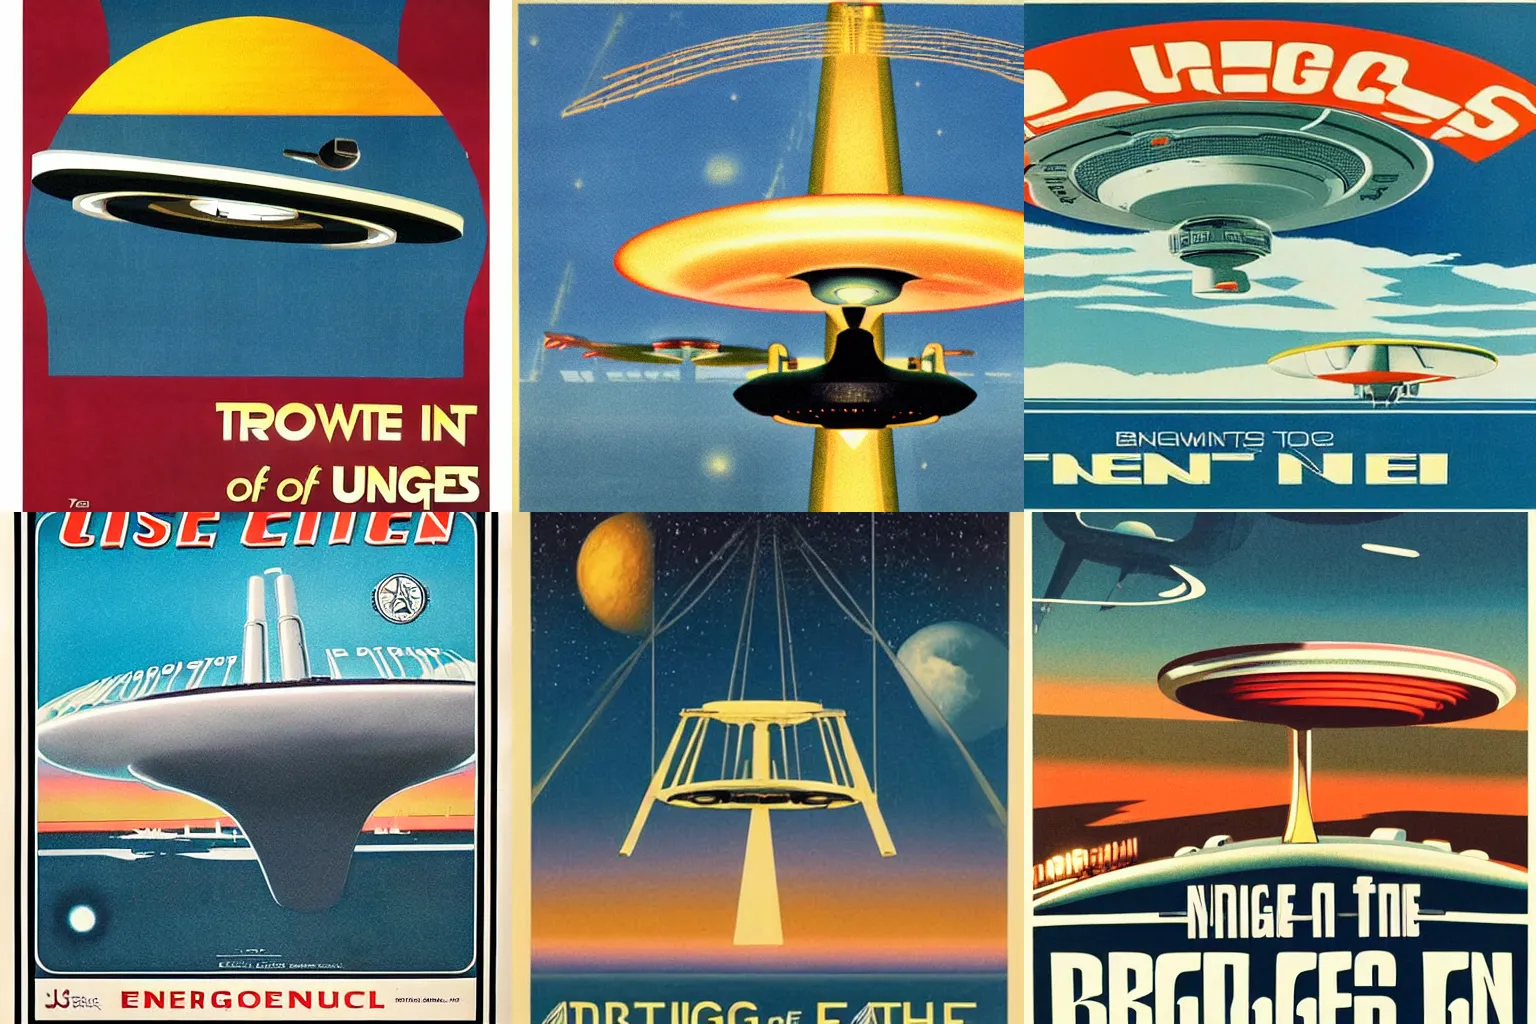 Prompt: 1970s nostalgia travel poster for the bridge of the USS Enterprise NCC 1701-D